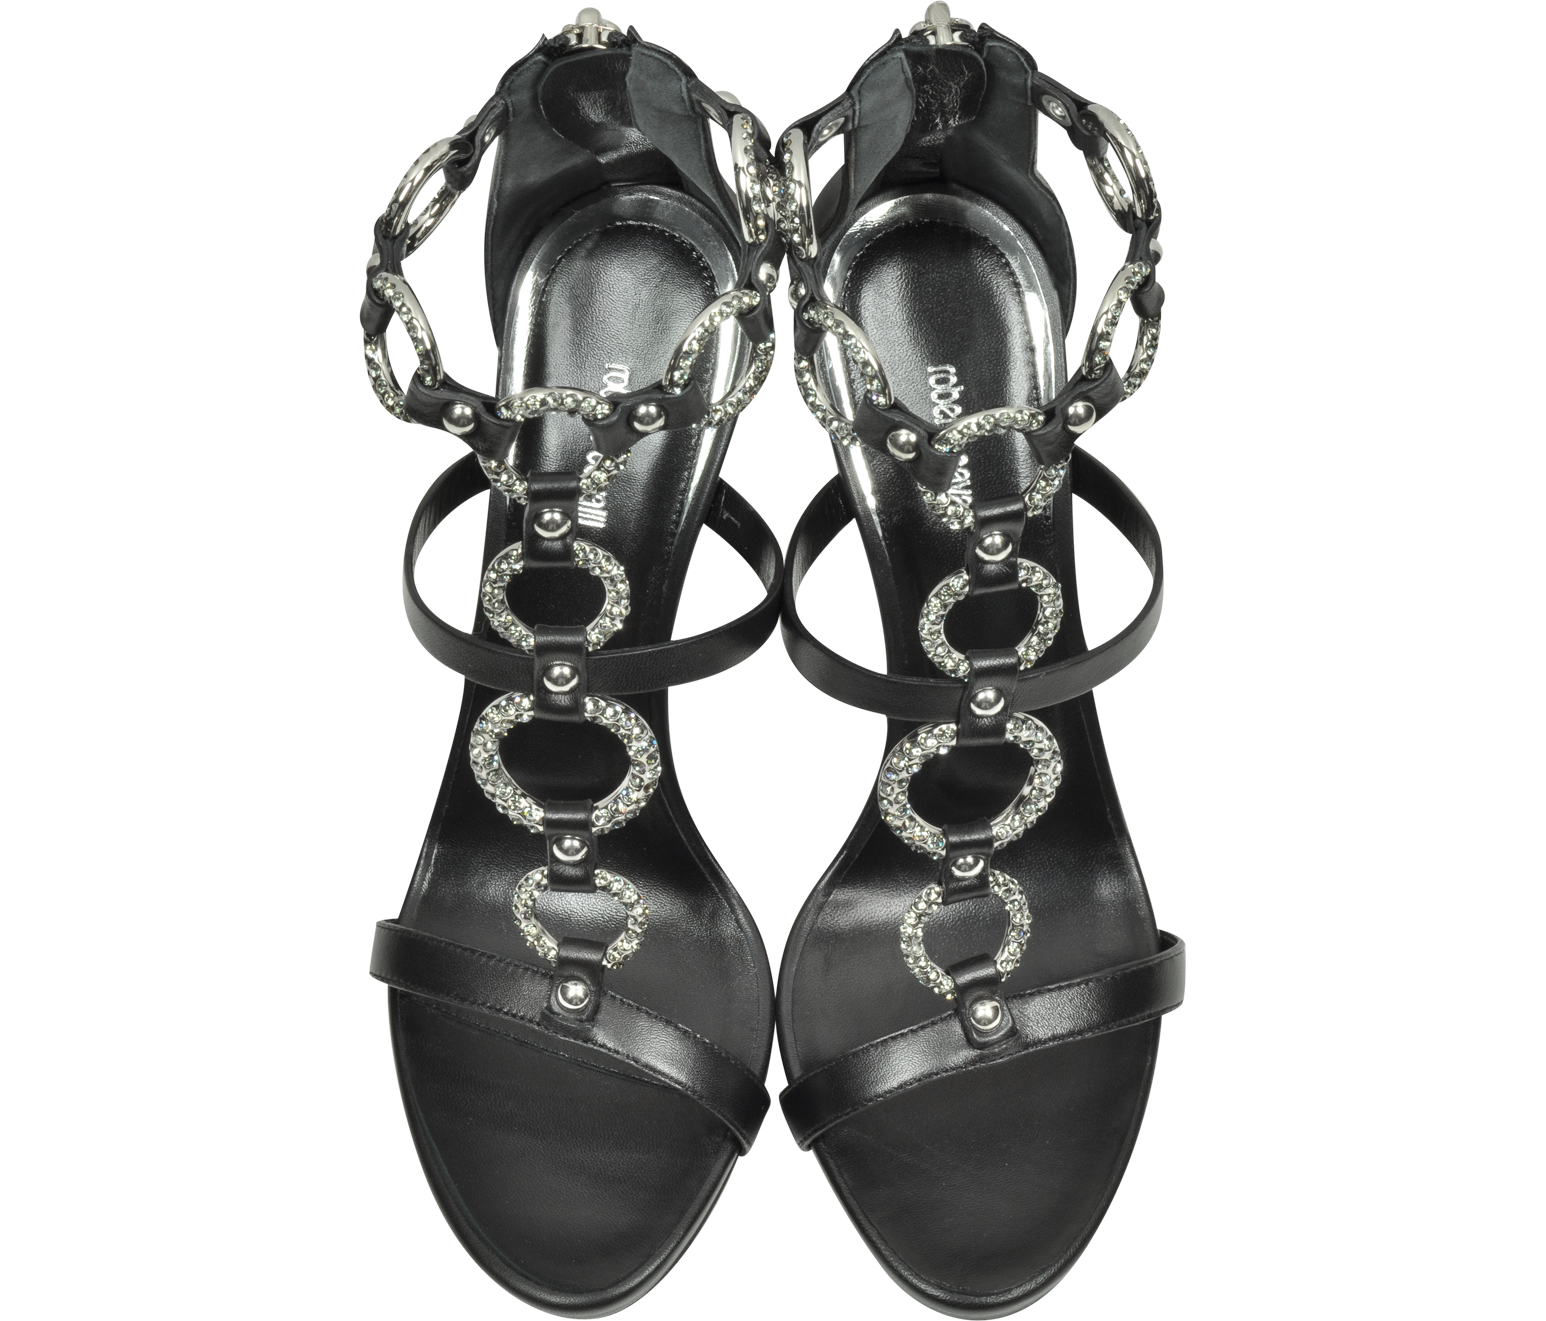 Roberto Cavalli Tassel Black Leather Sandal w/Crystals 37 IT/EU at FORZIERI